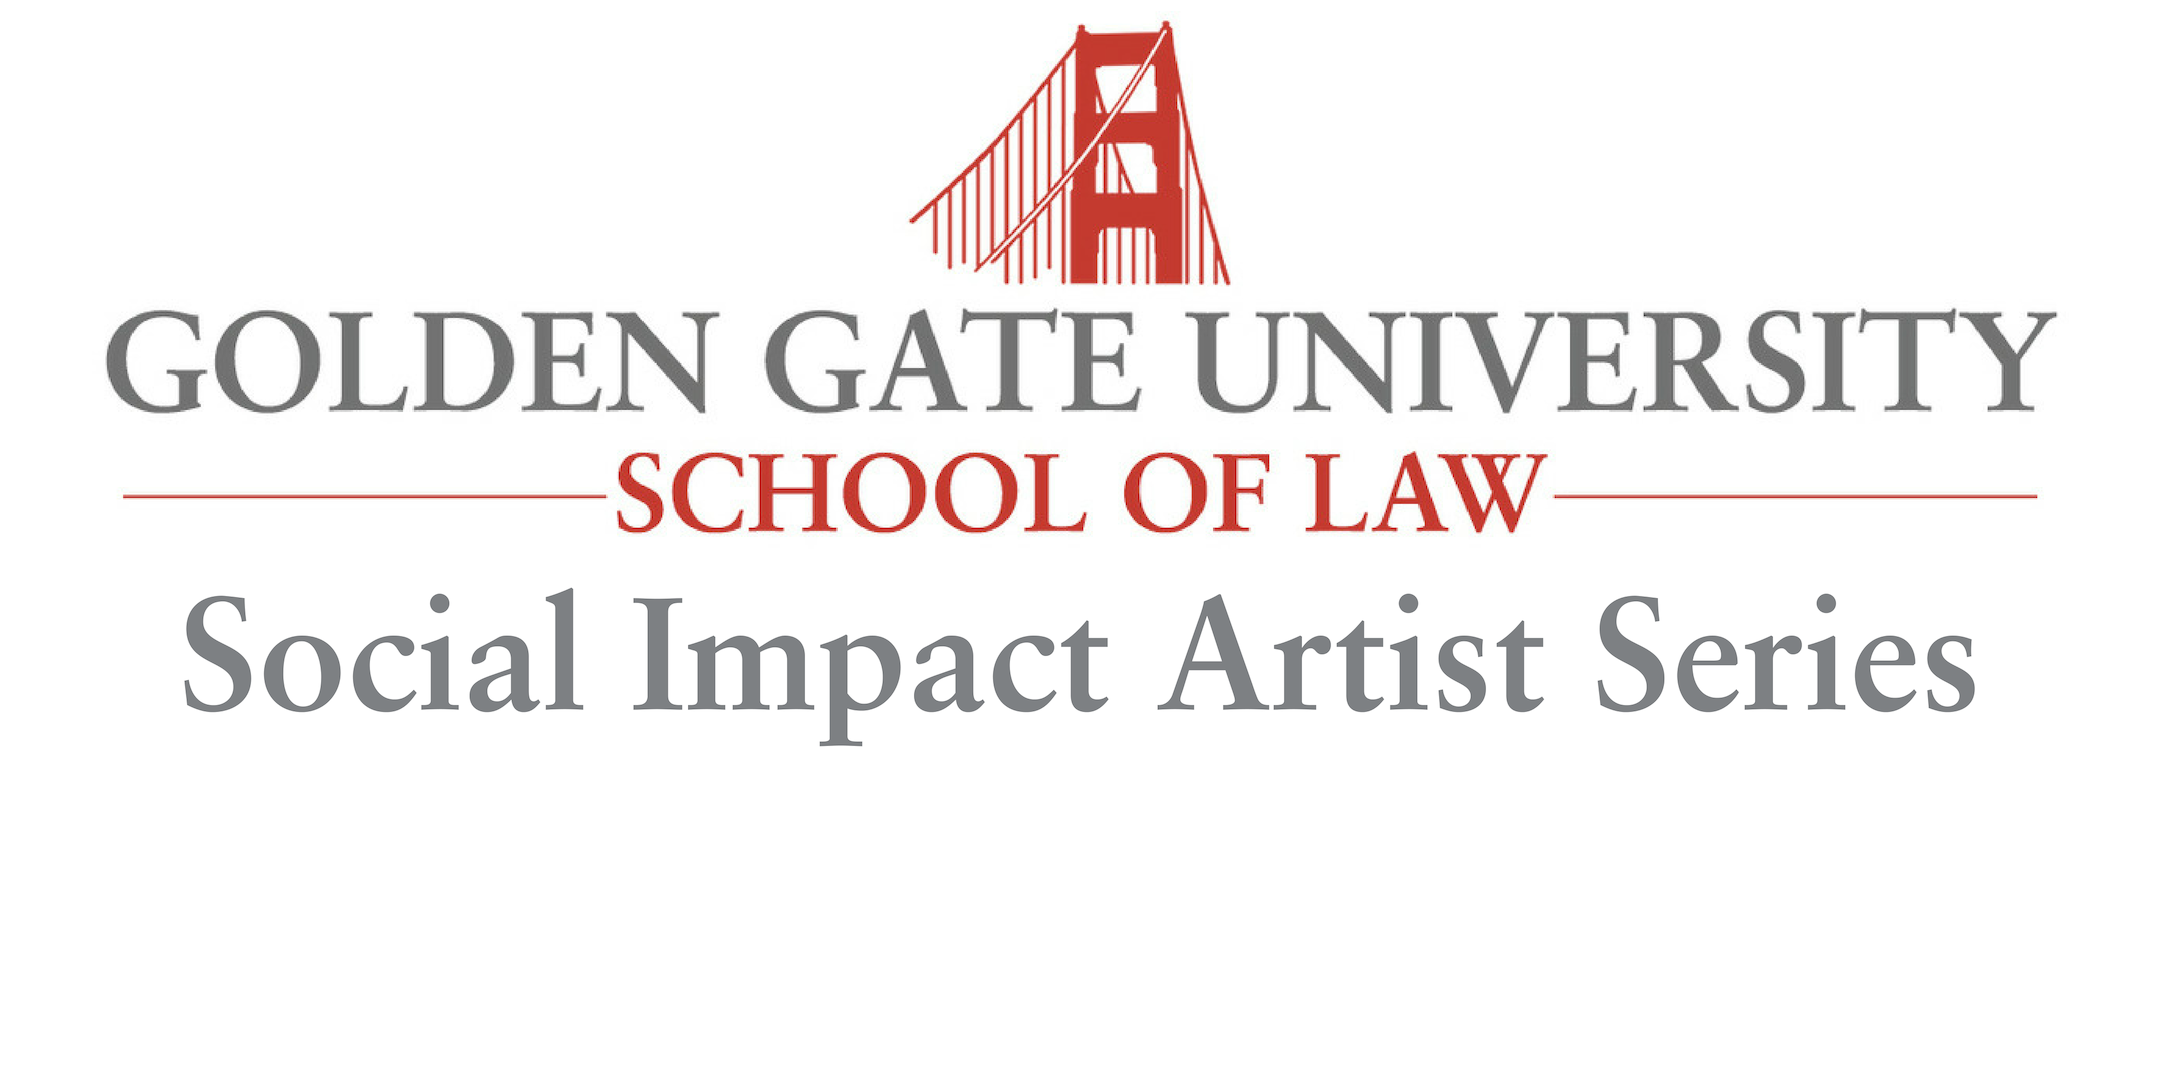 The GGU Law Social Impact Artist Series